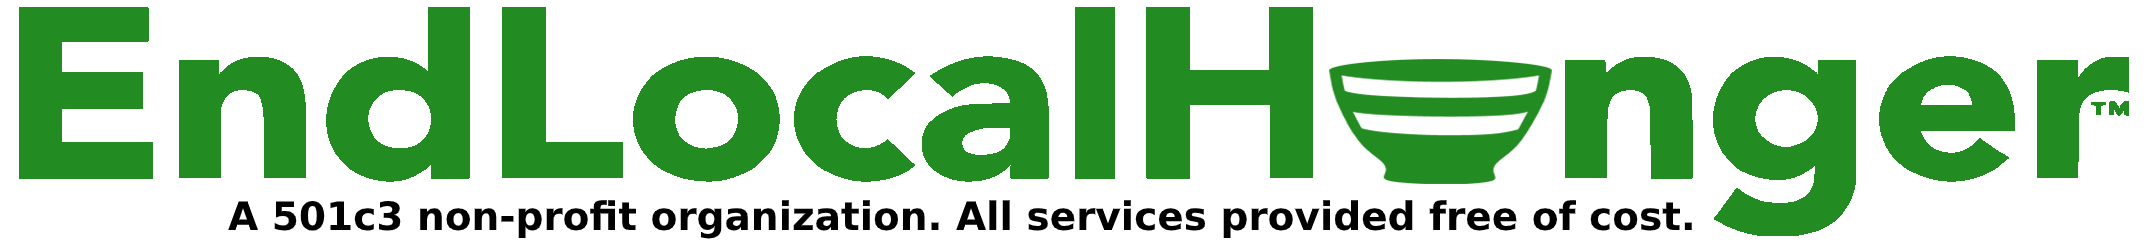 Familly Green Survival Logo